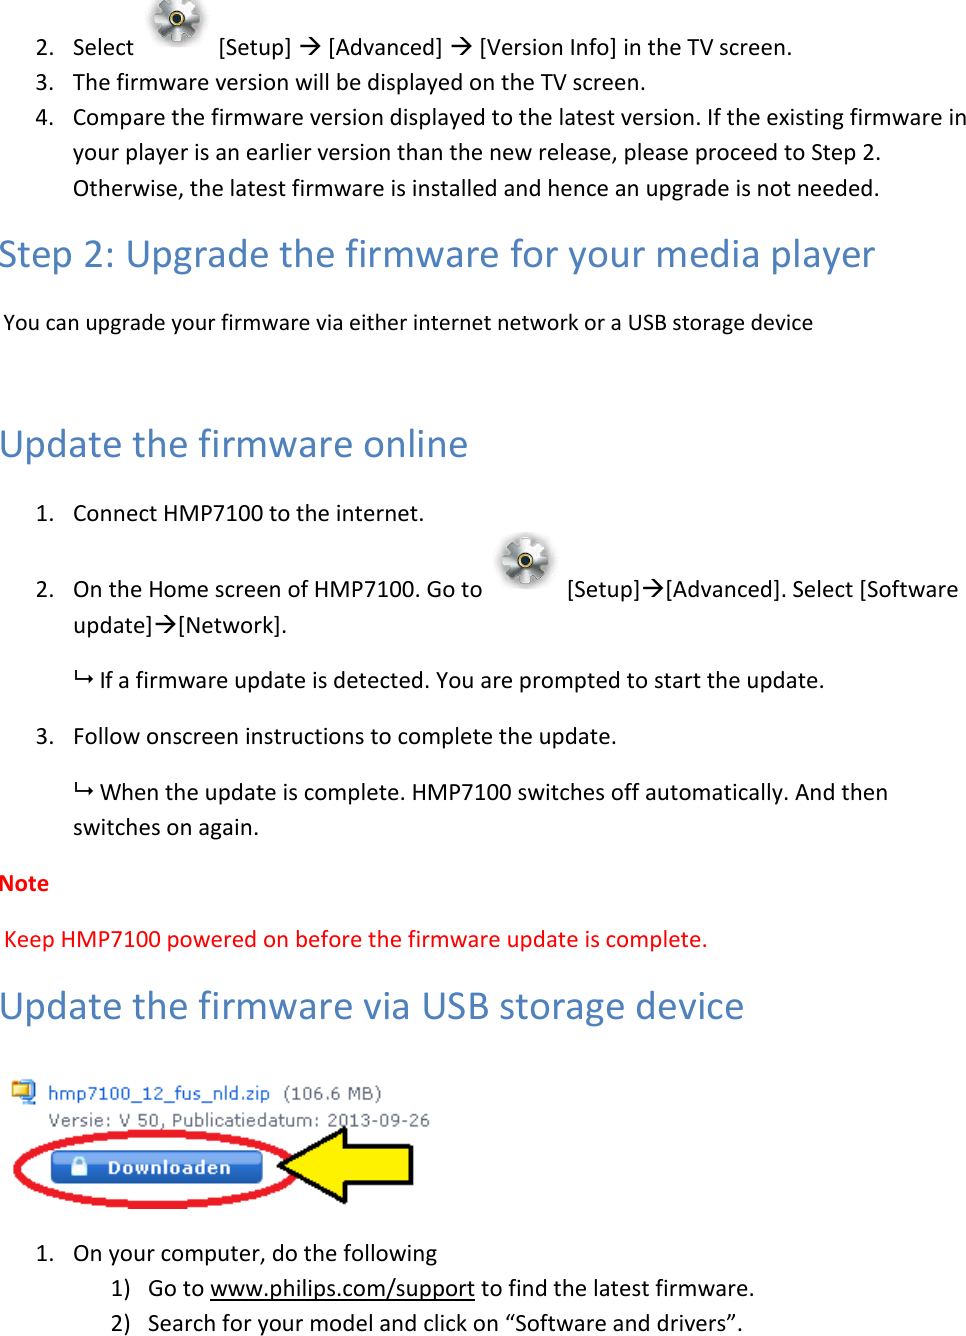 philips tv firmware update instructions